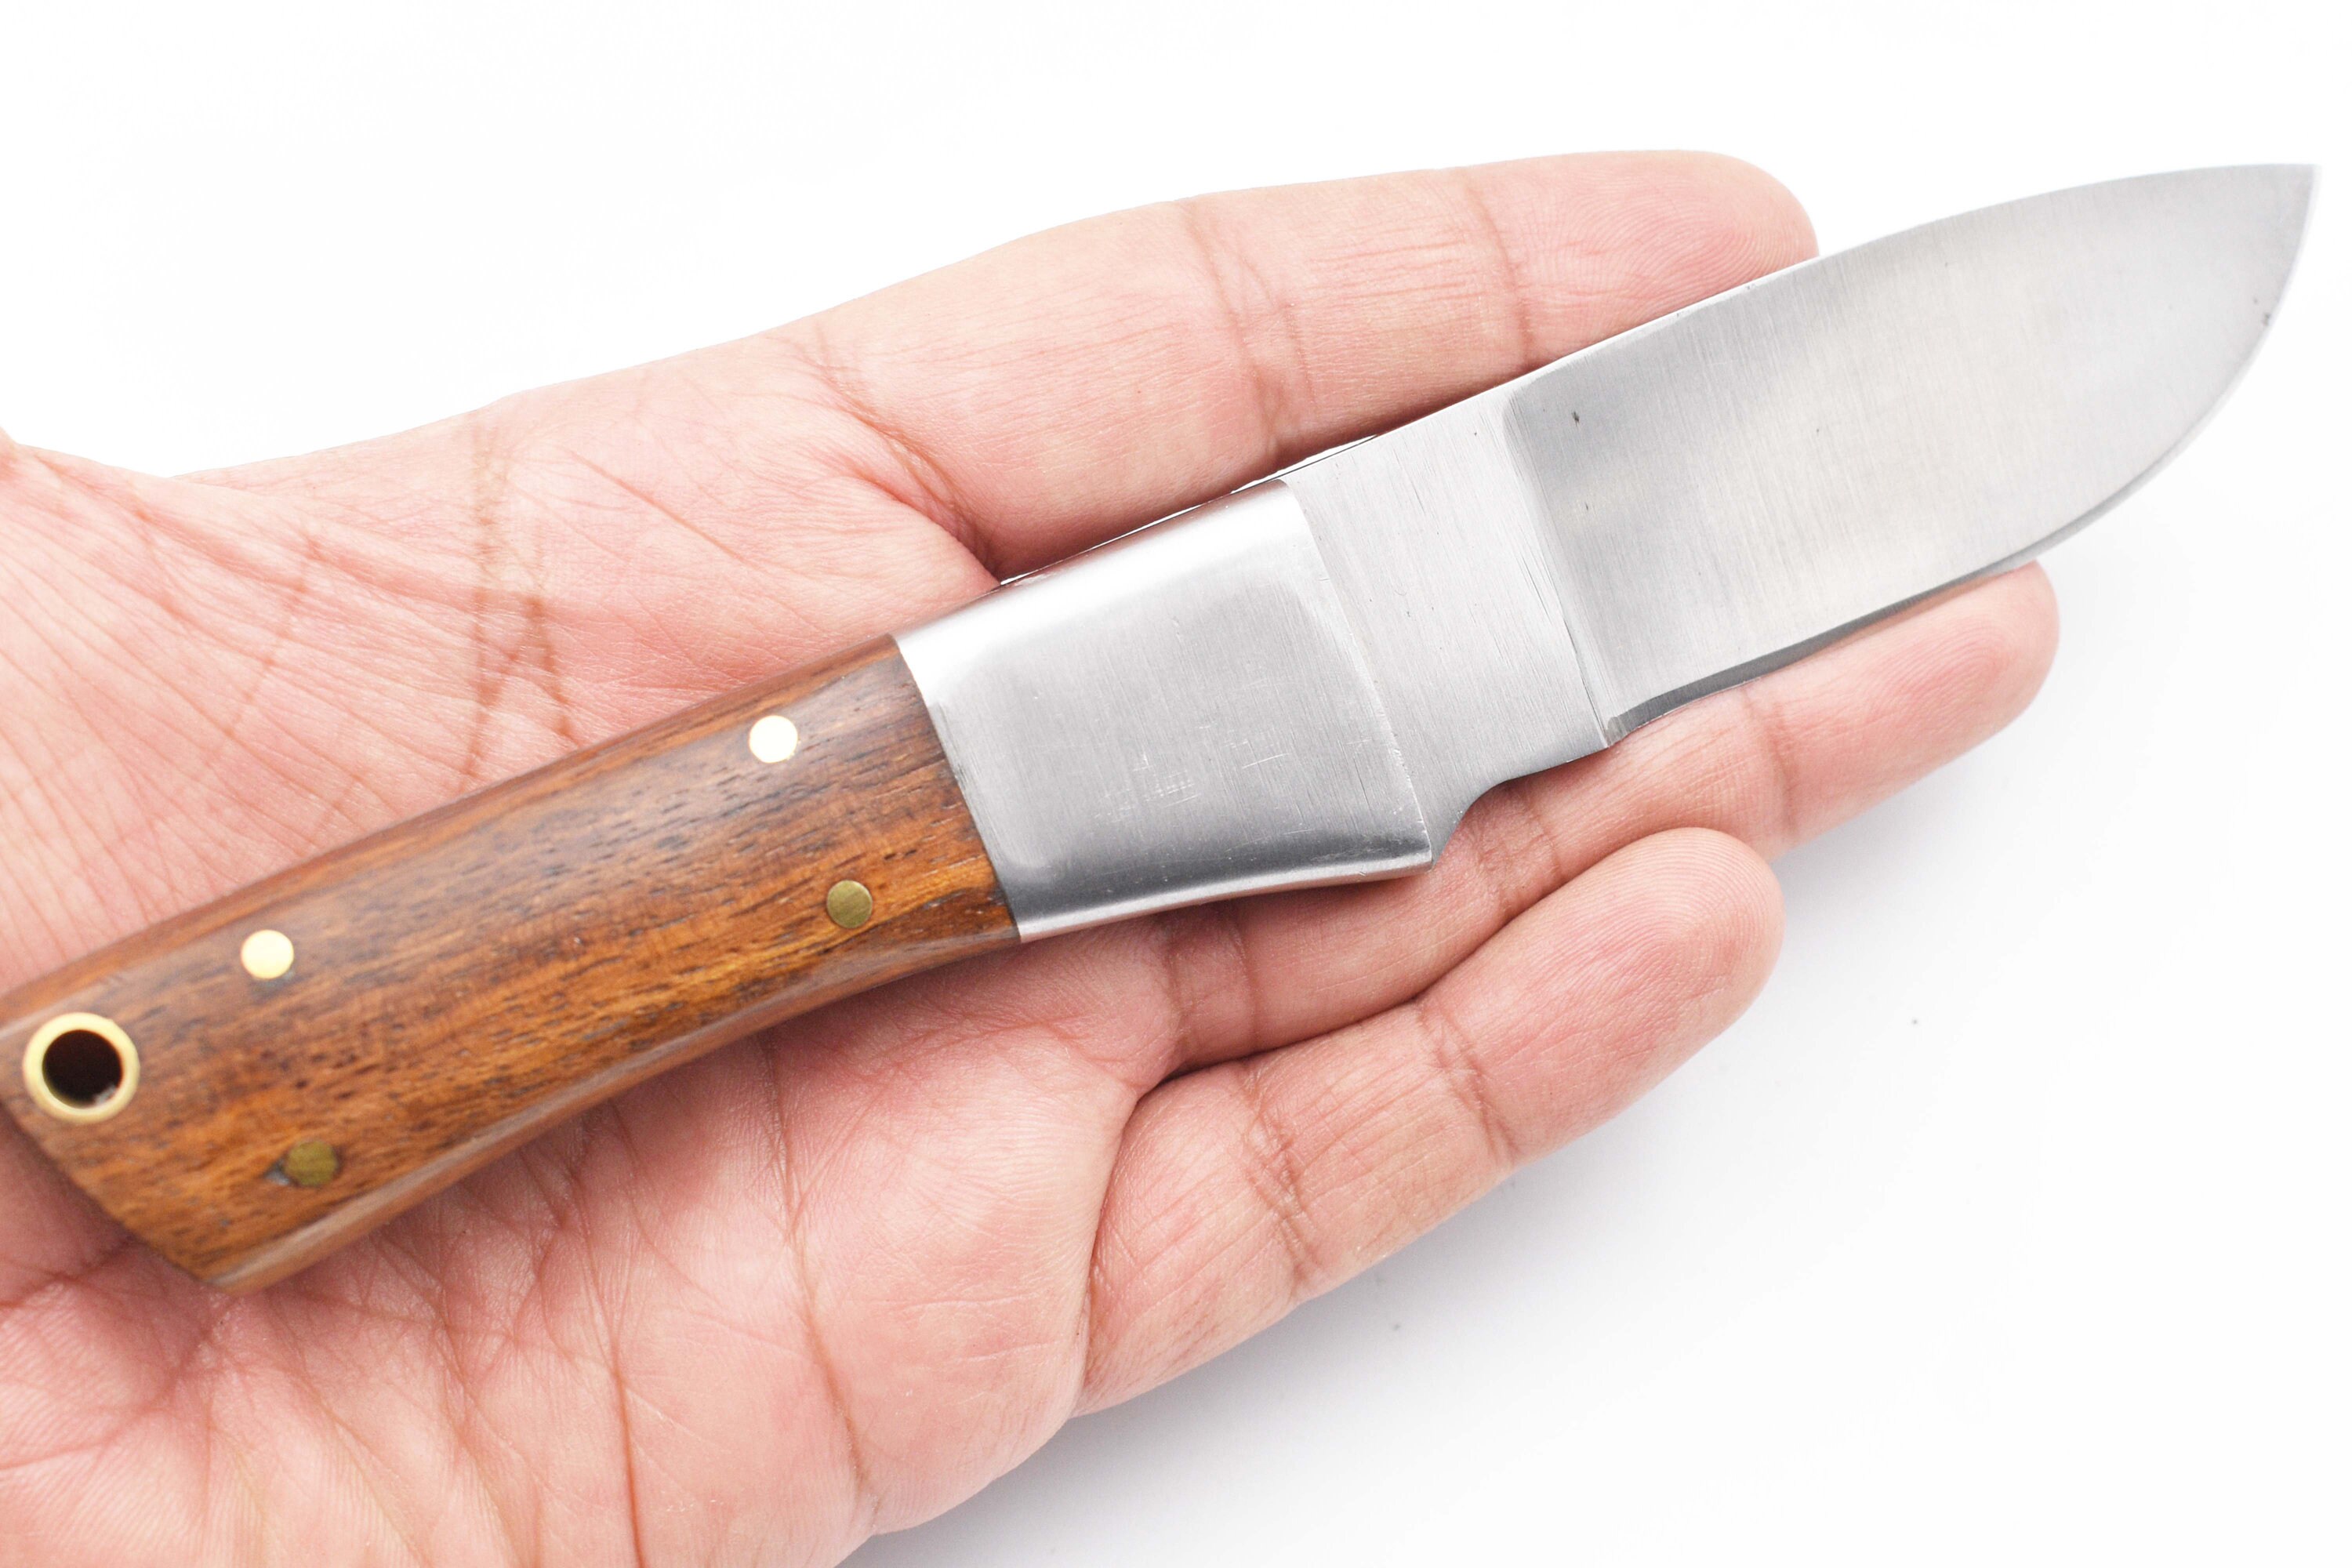 Woodworking Tool 175mm Small Left Handed Japanese Kiridashi Kogatana Utility Knife, with Blade Sheath, for Wood Carving & Bamboo Craft